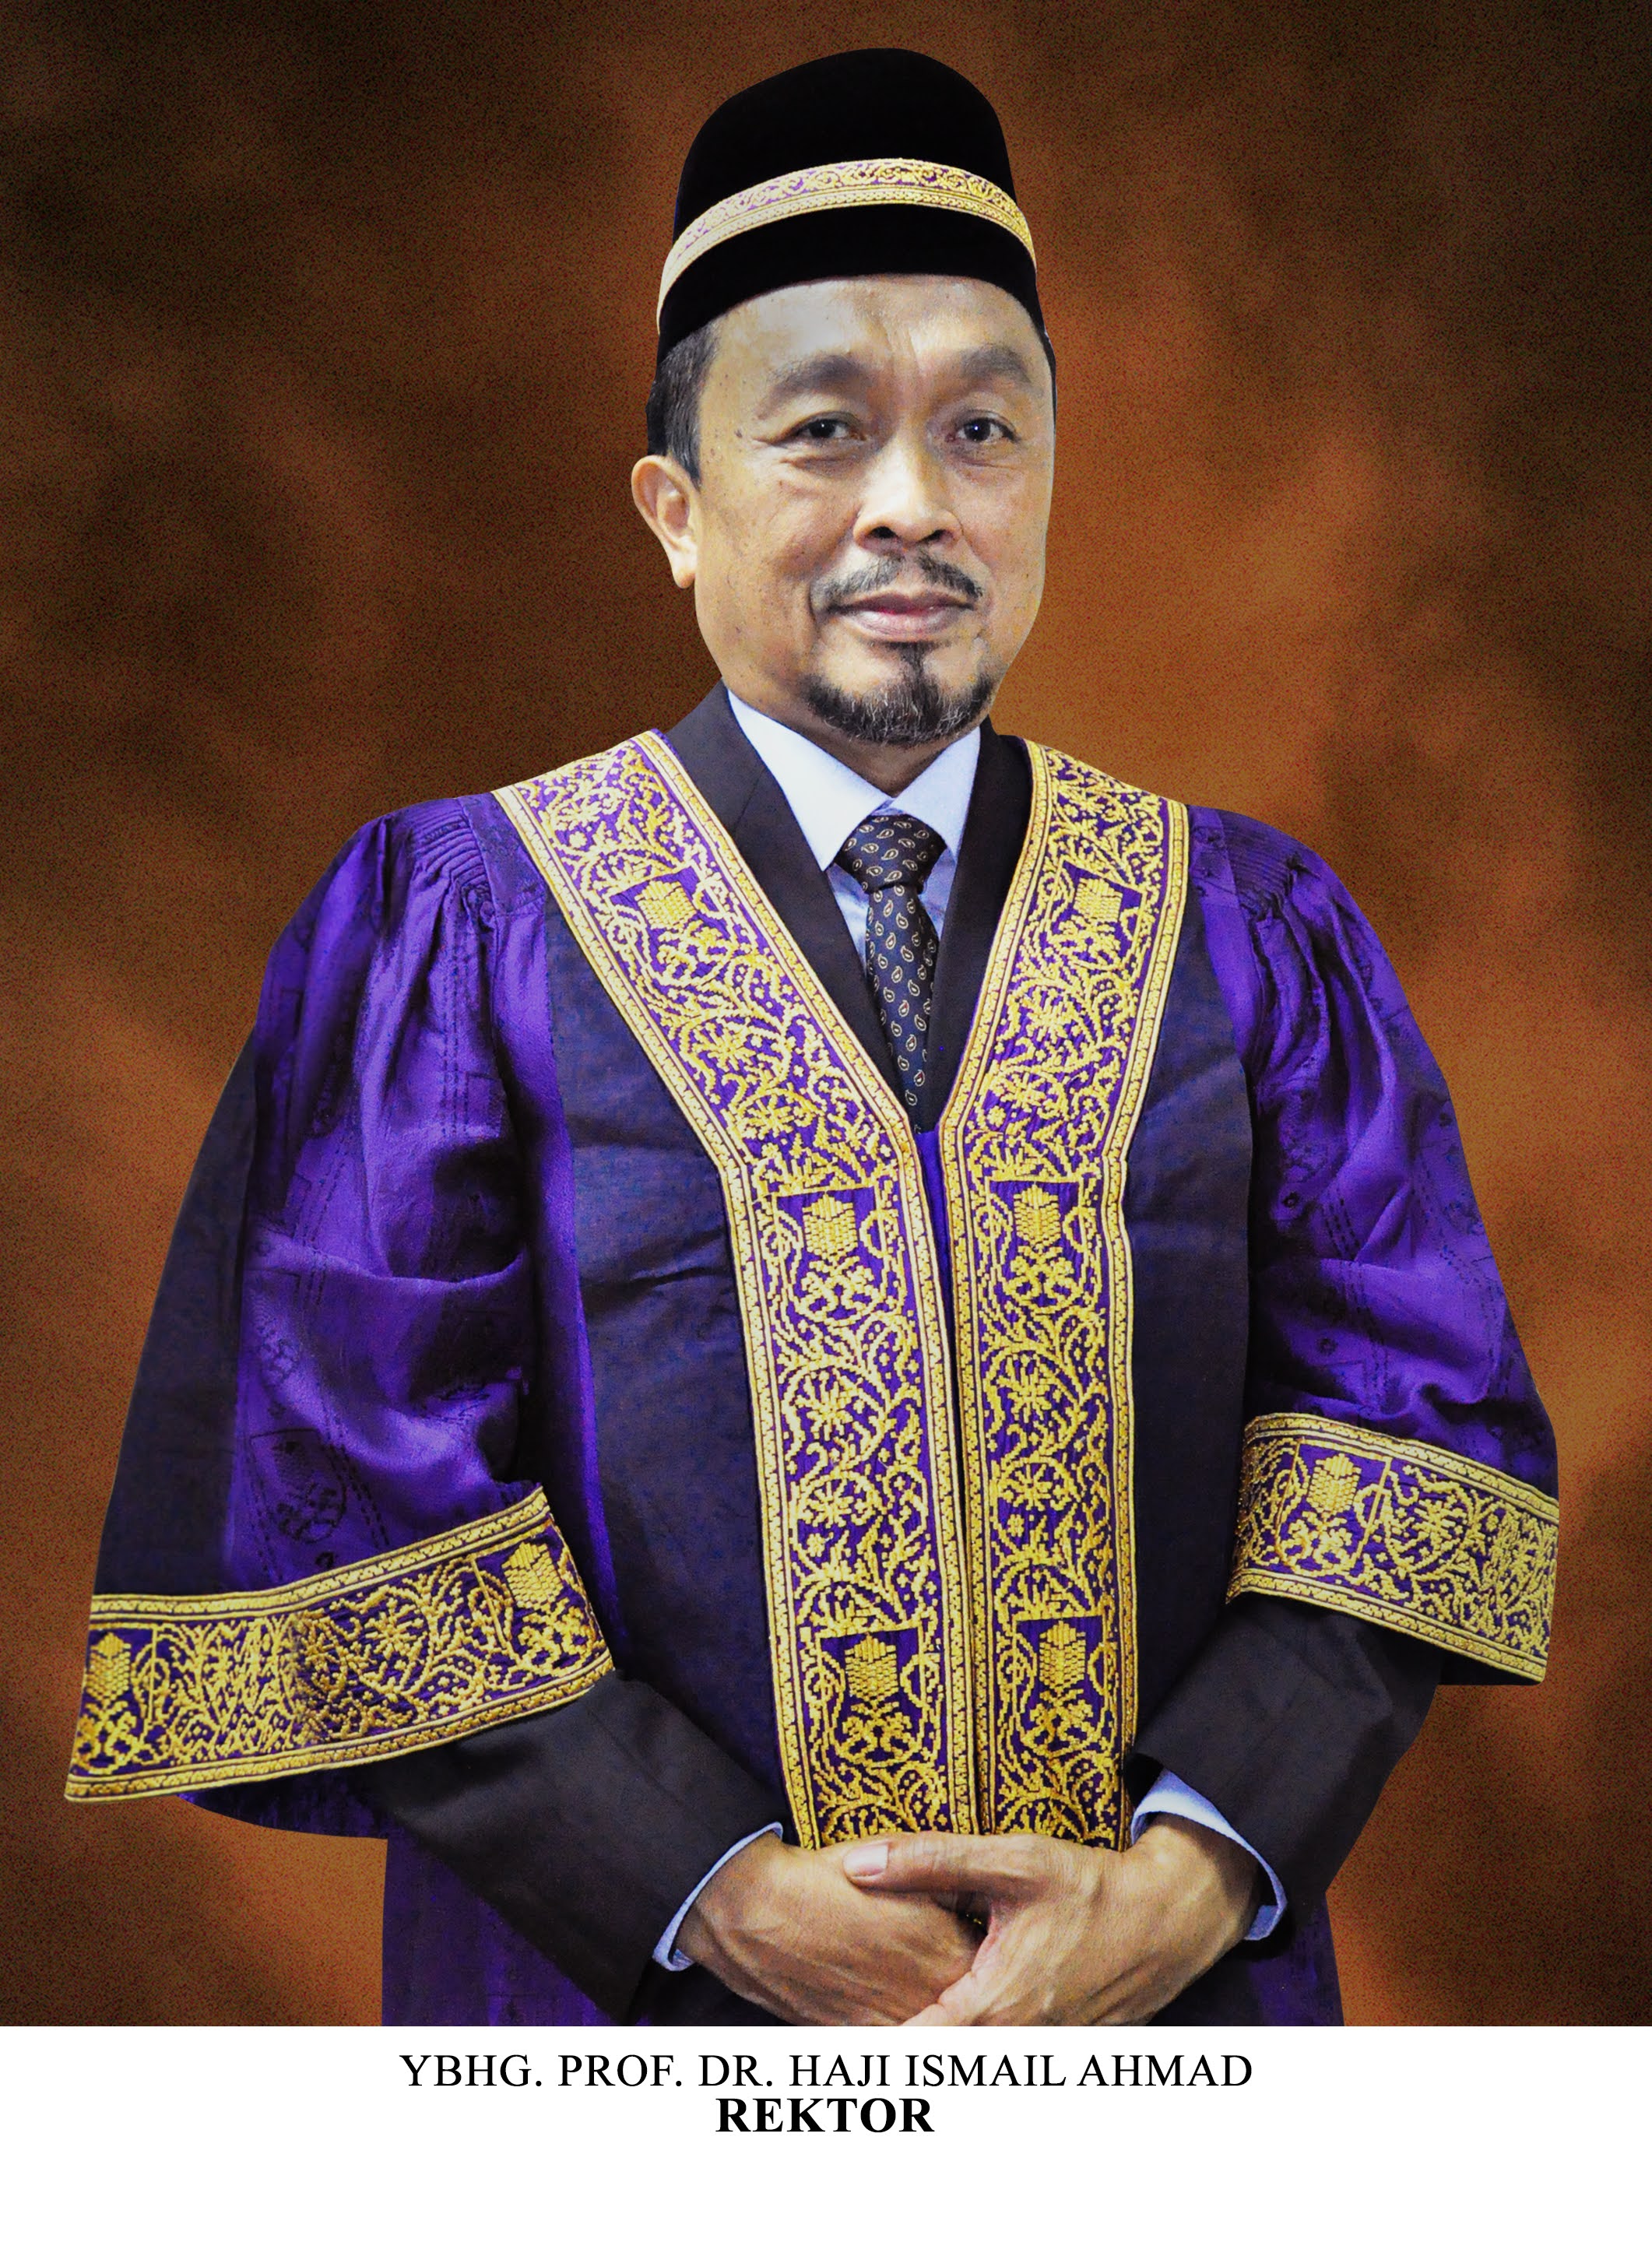 Prof. Dr. Hj. Ismail Ahmad